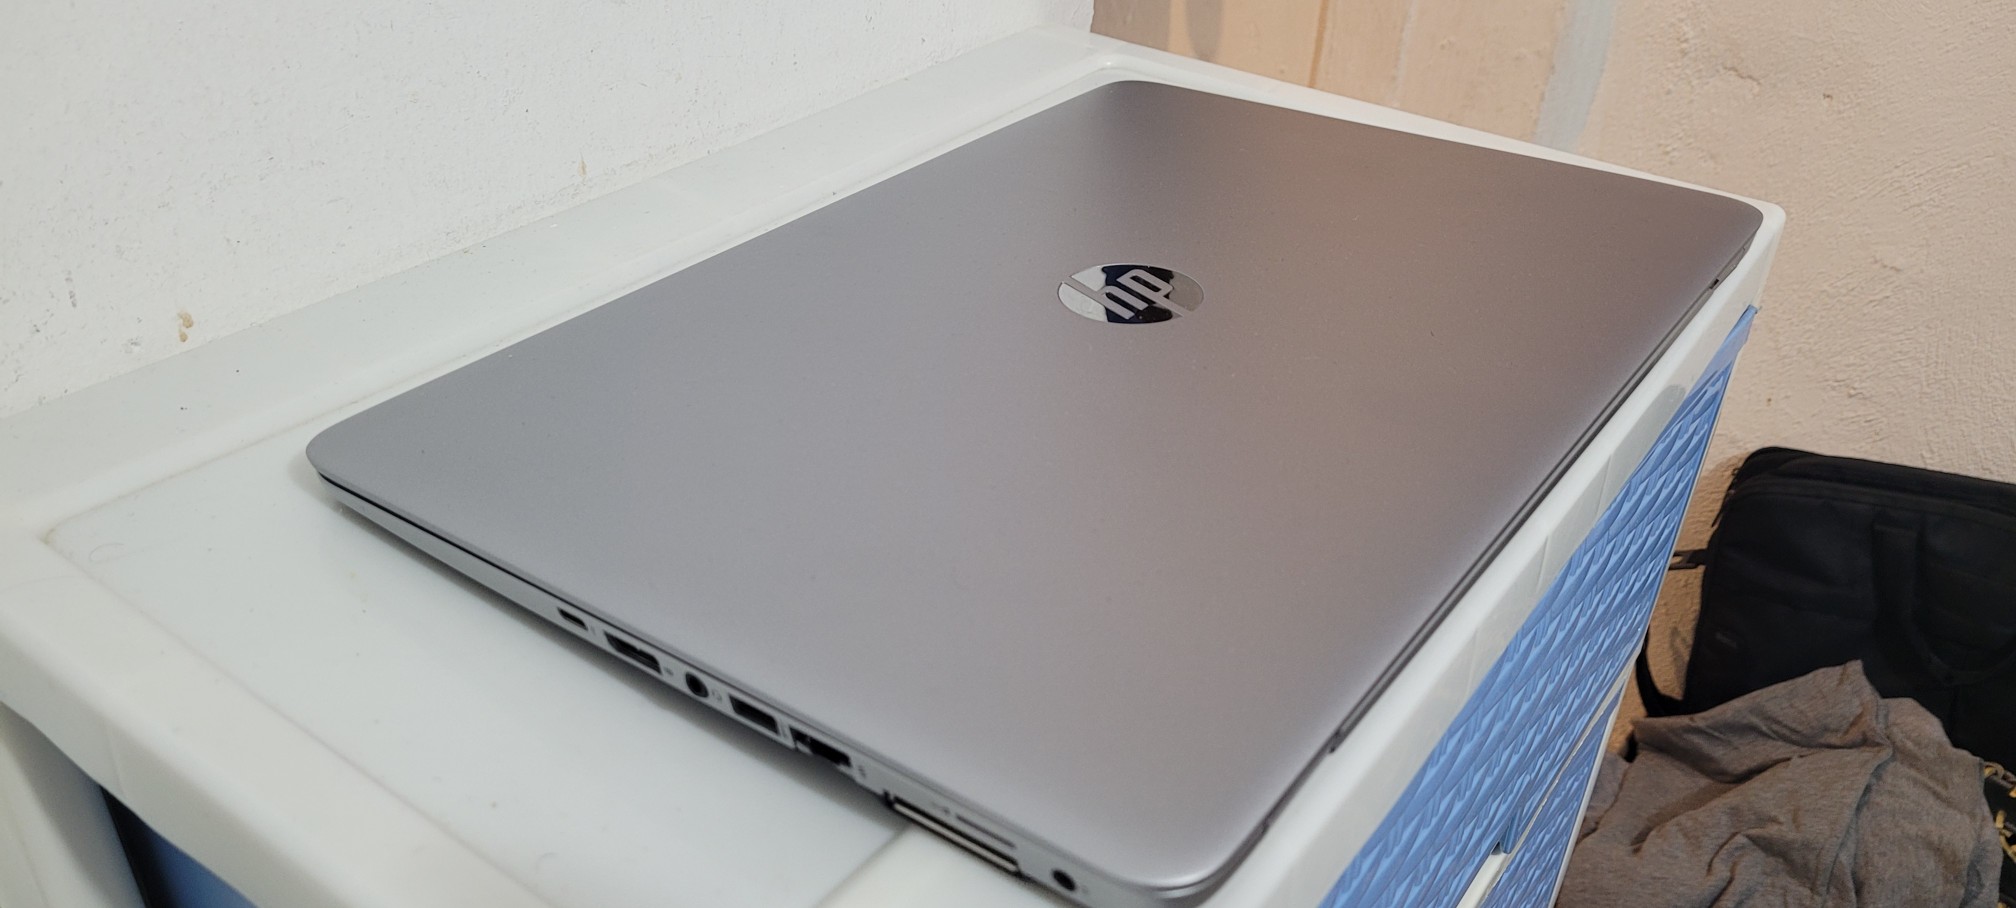 computadoras y laptops - laptop hp Slim 14 Pulg Core i5 6ta Gen Ram 8gb dd4 Disco 500gb SSD  New 2